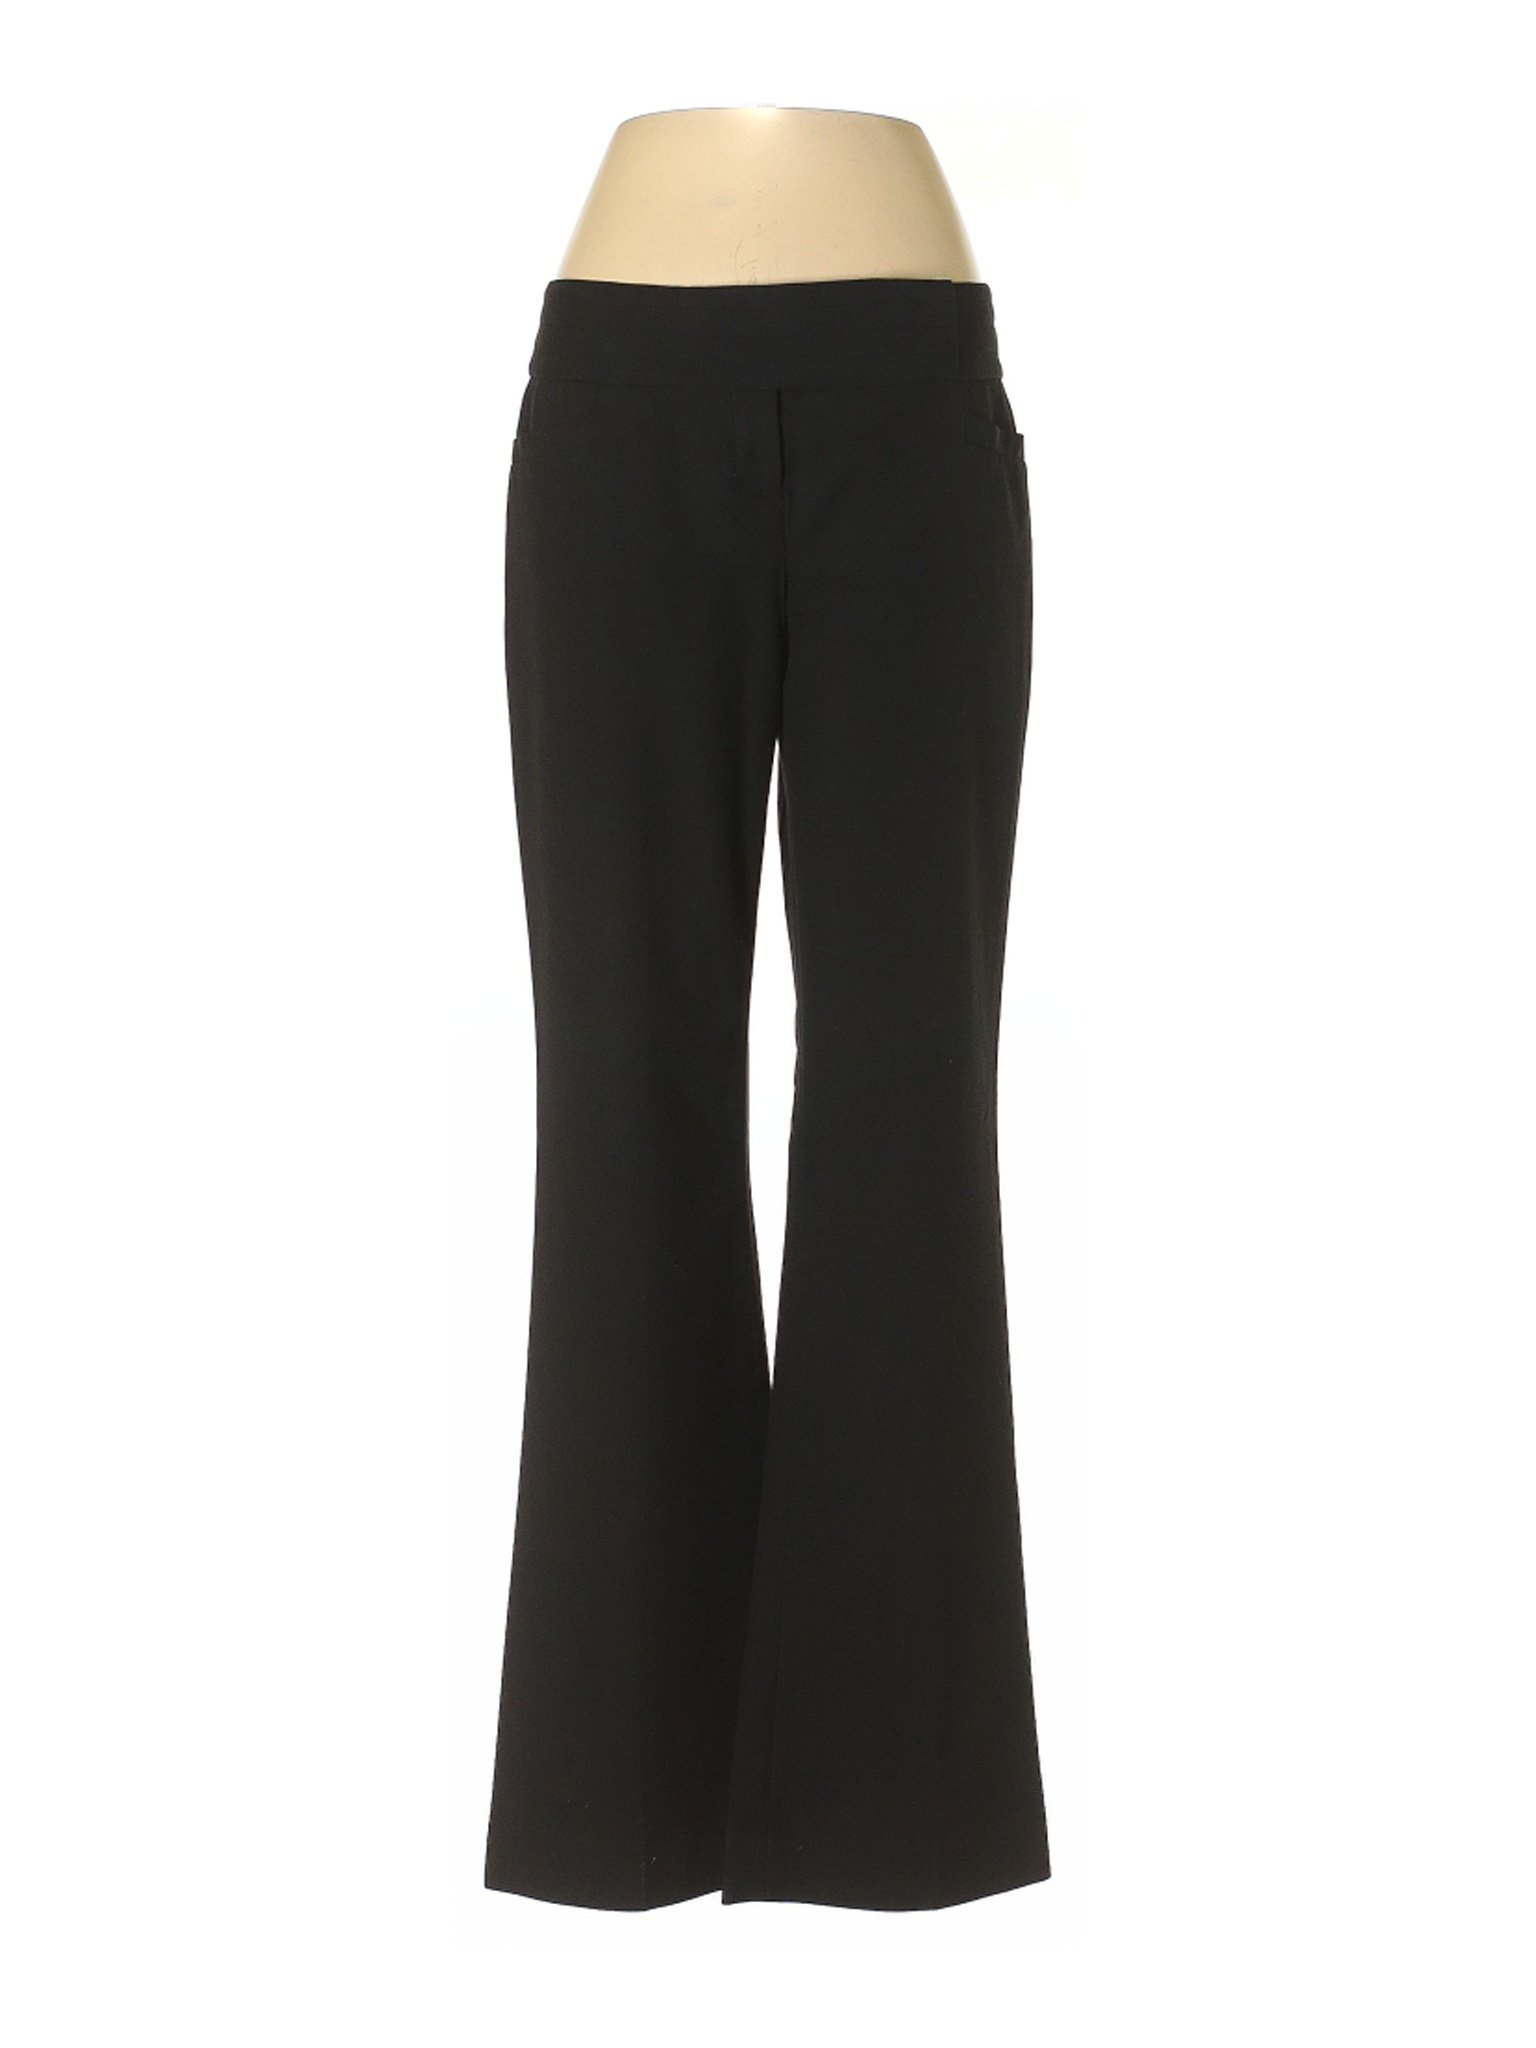 The Limited Women Black Dress Pants 4 | eBay